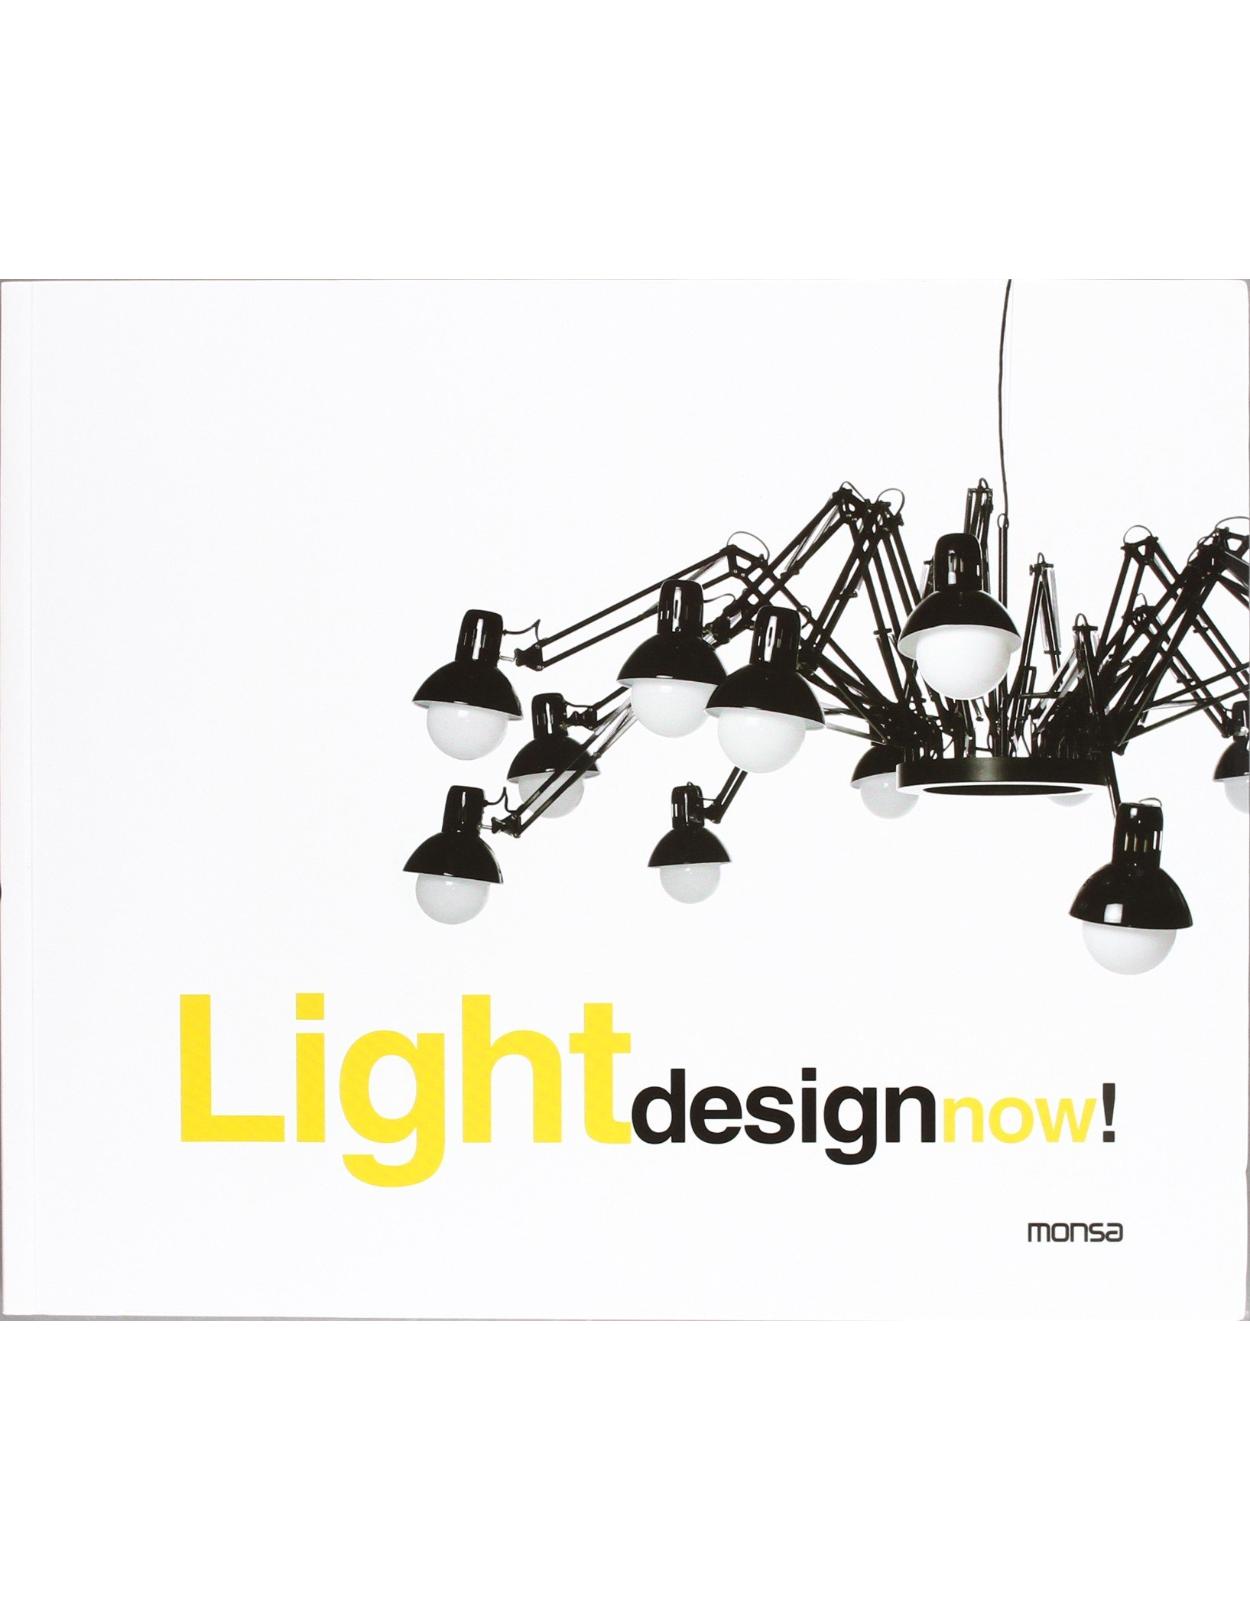 Light design now